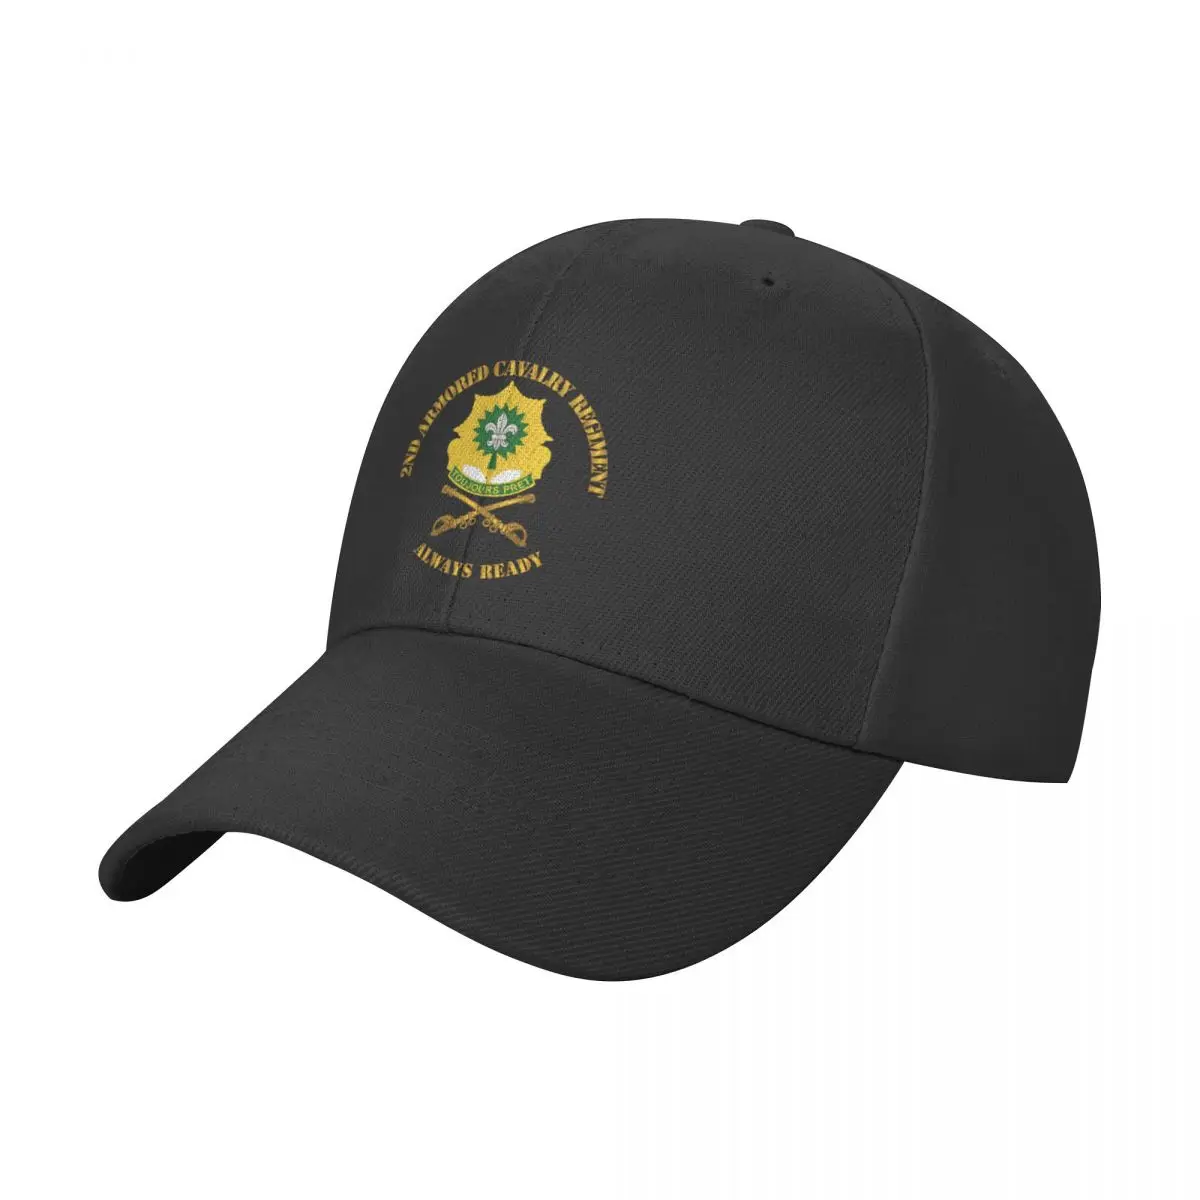 

Army - 2nd Armored Cavalry Regiment DUI - Always Ready Baseball Cap tea Hat New Hat beach hat Hip Hop Caps For Men Women's